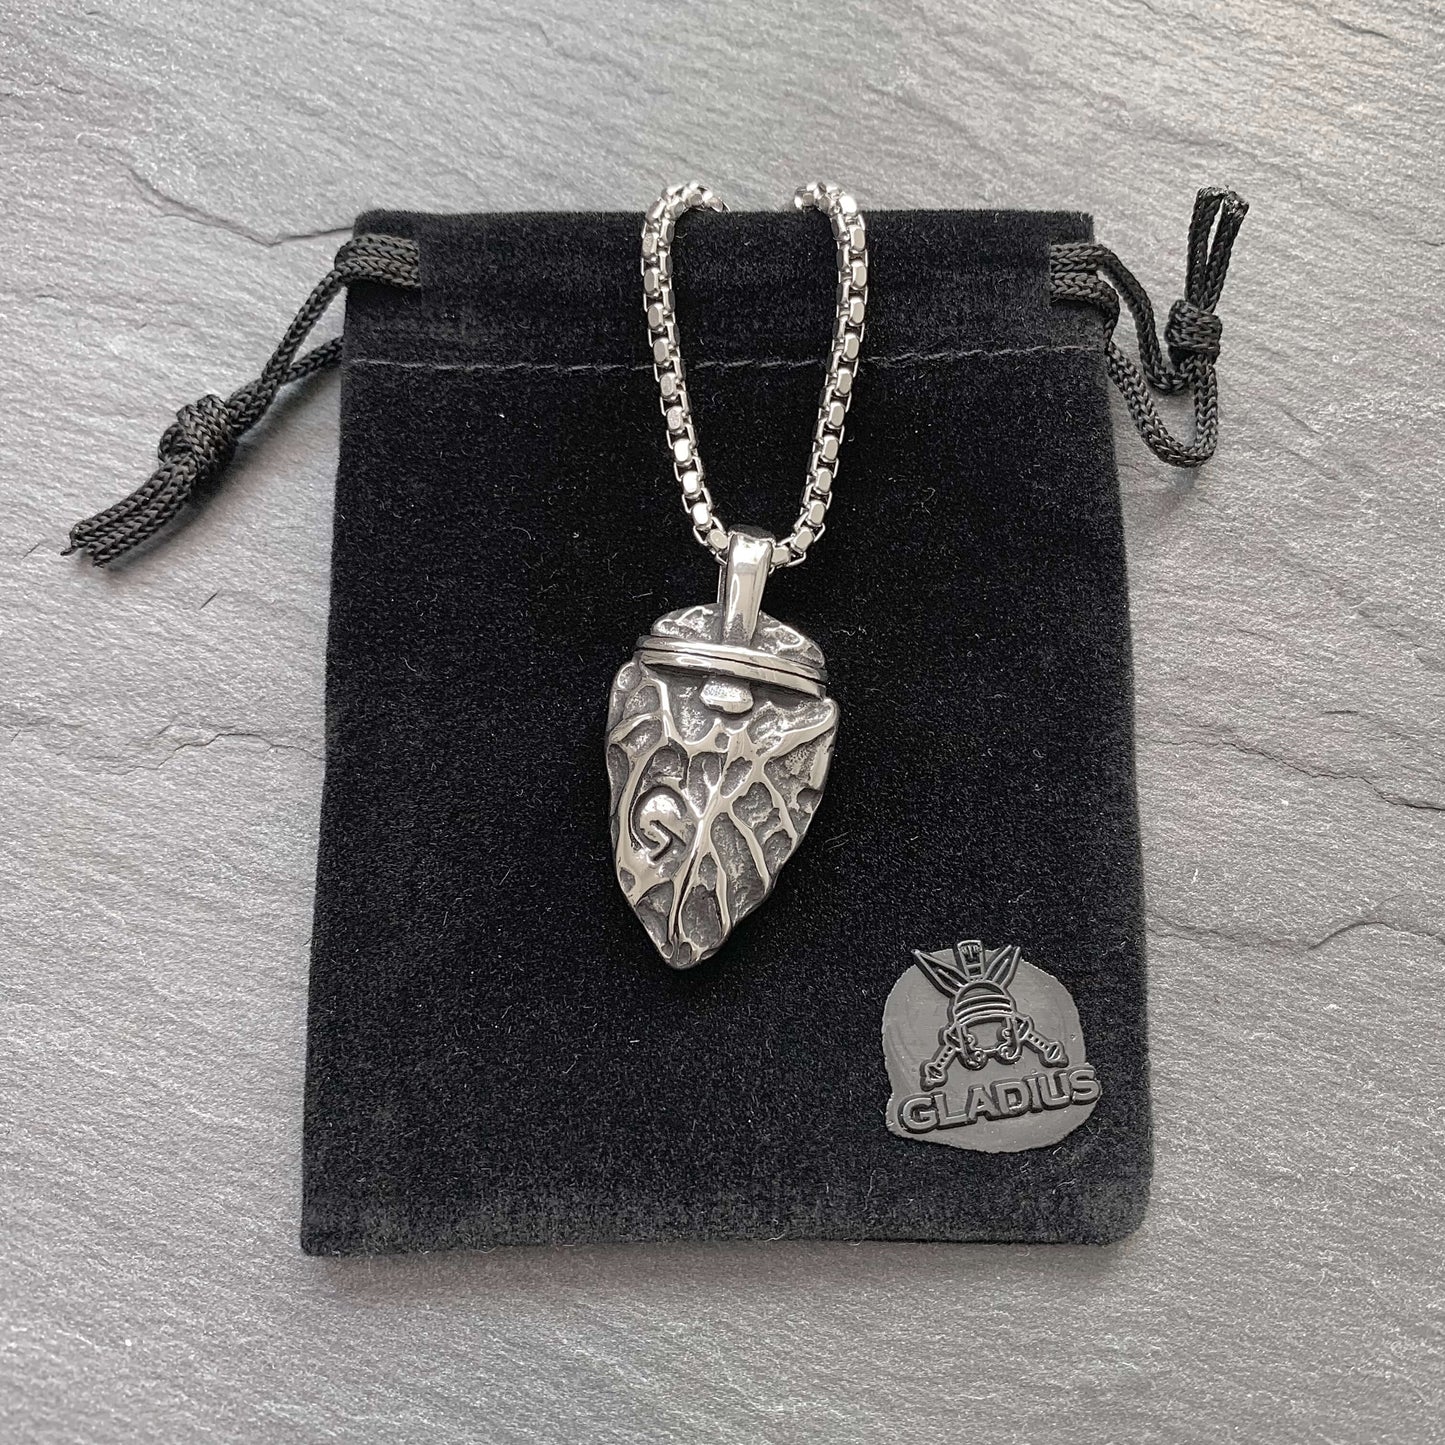 Gladius Heart Necklace